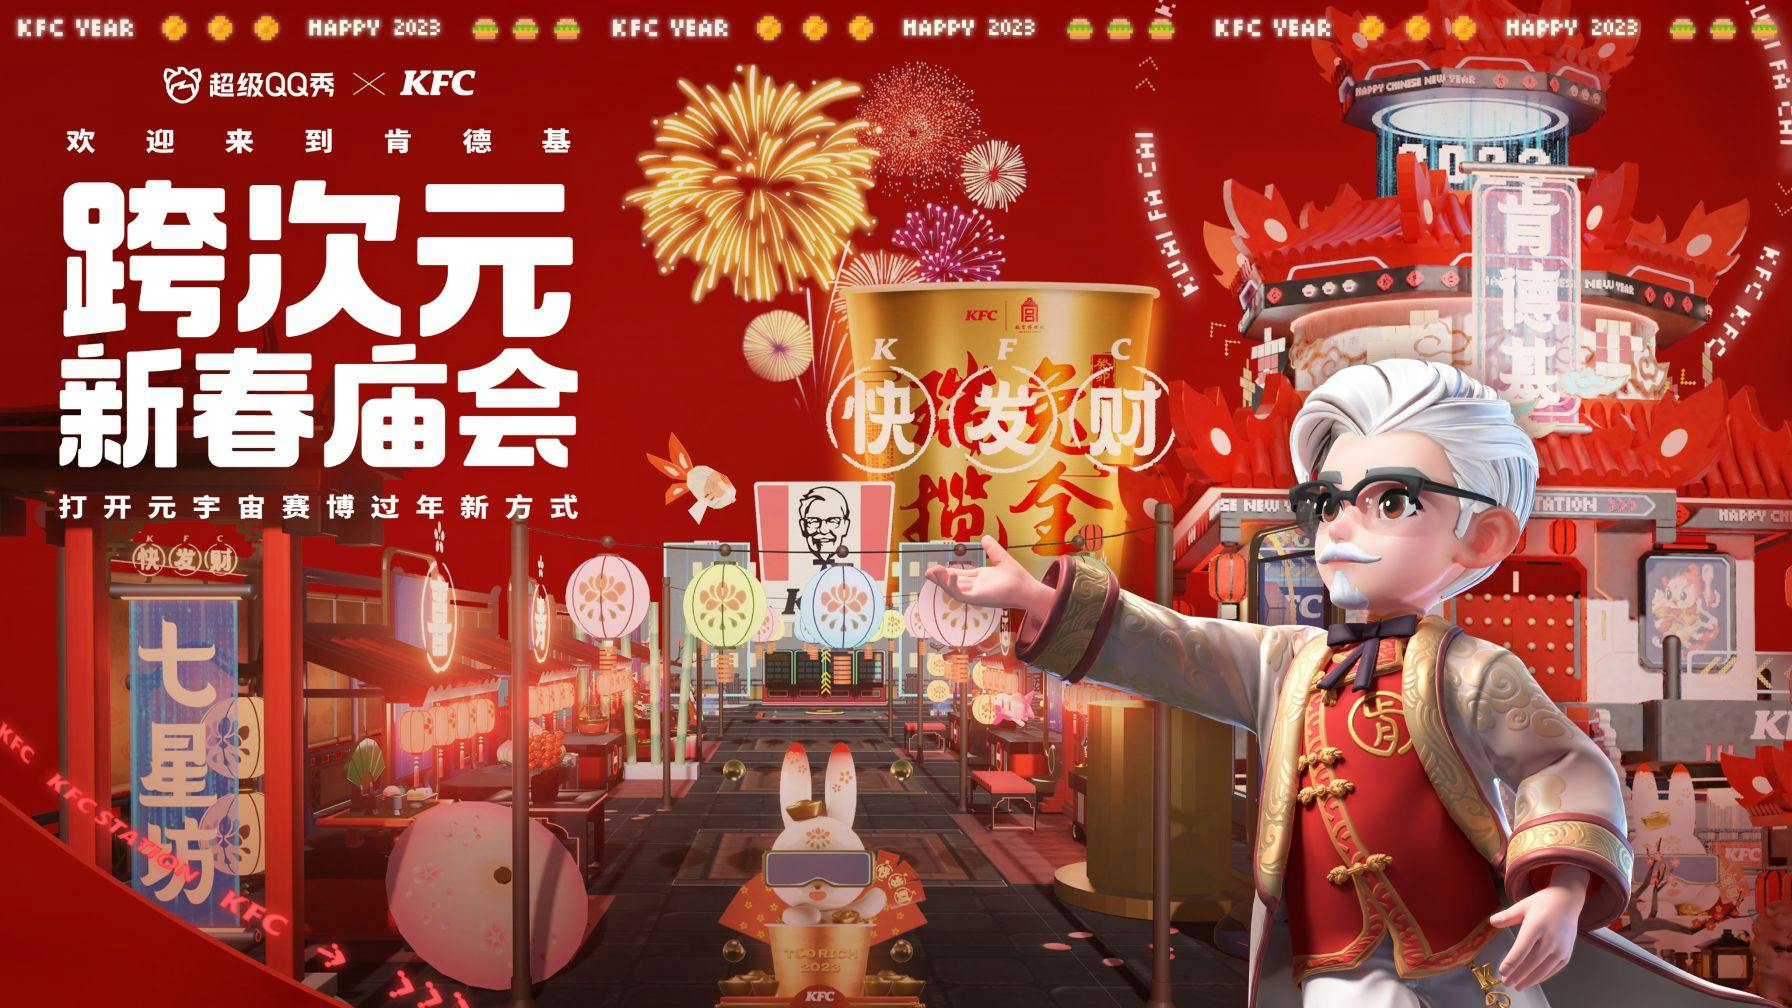 KFC Temple Fair Campaign image